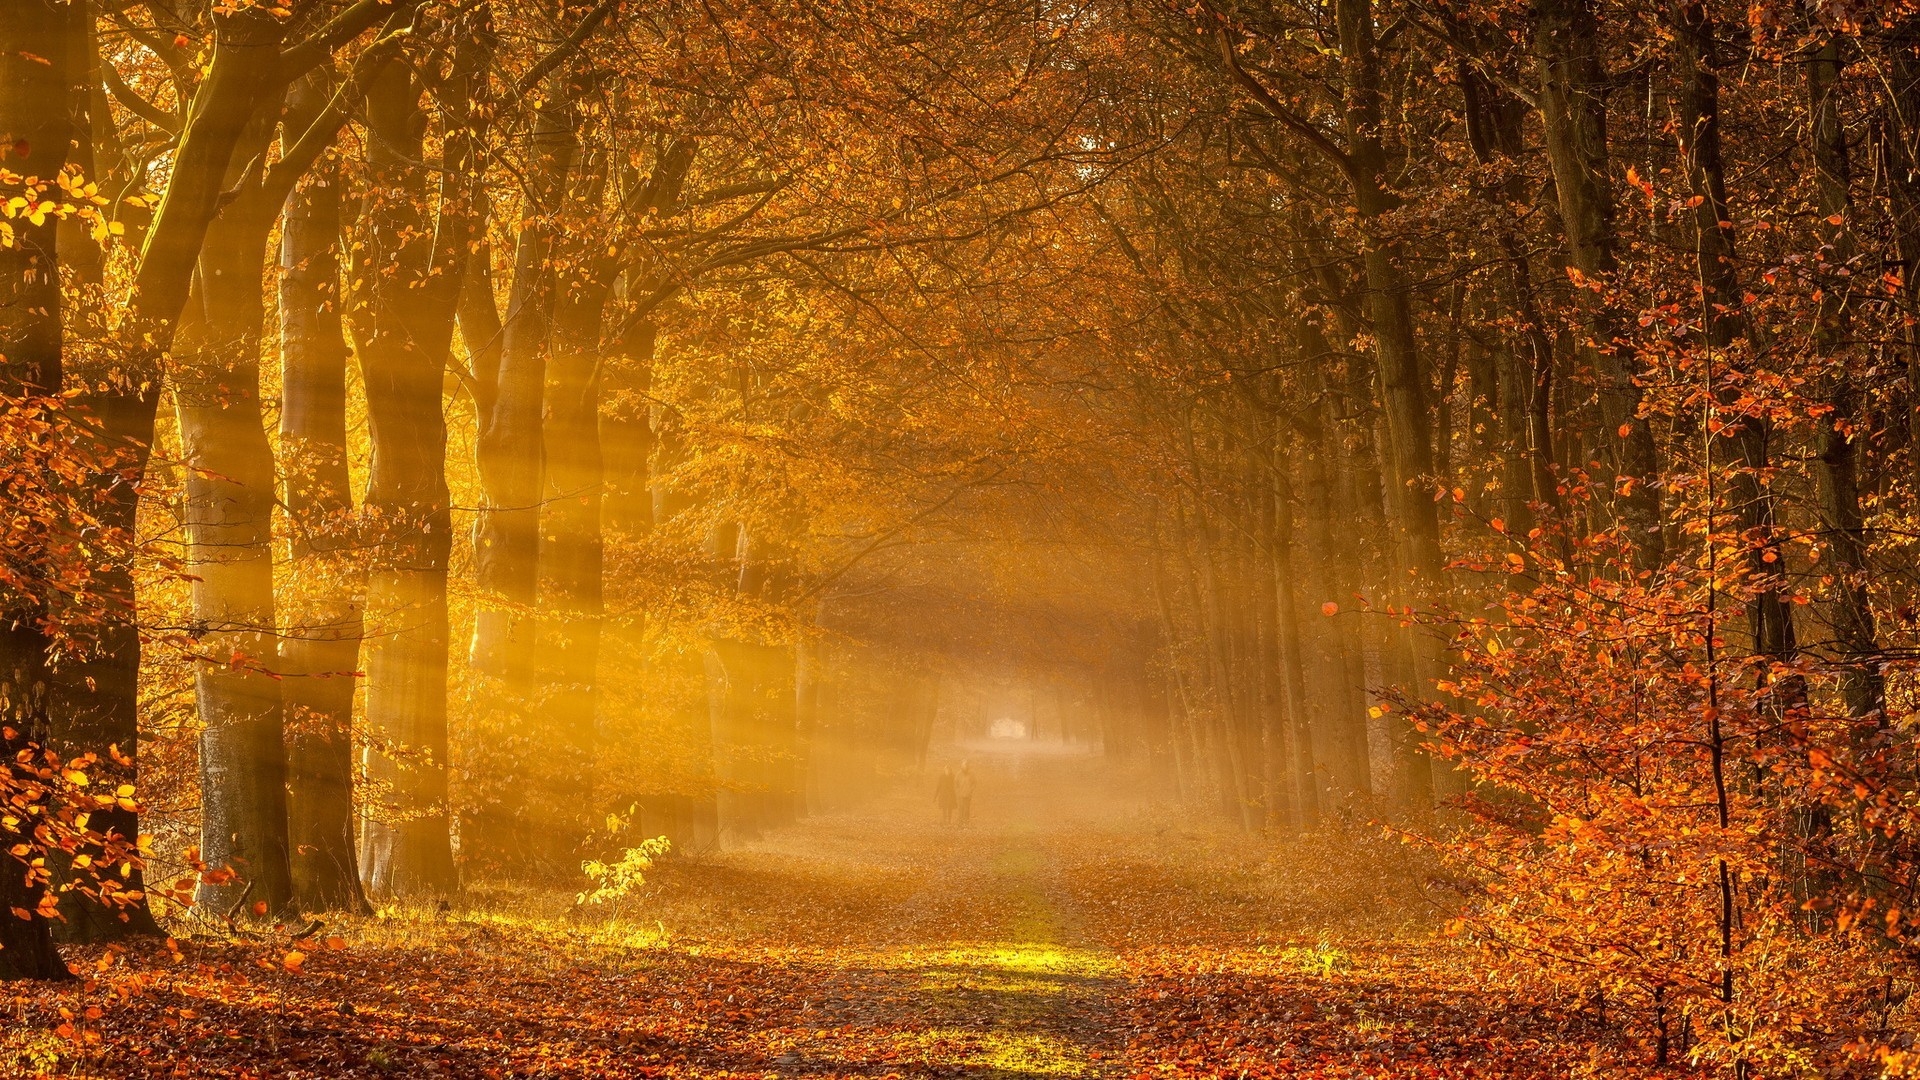 Fantastic Autumn Landscape for 1920 x 1080 HDTV 1080p resolution